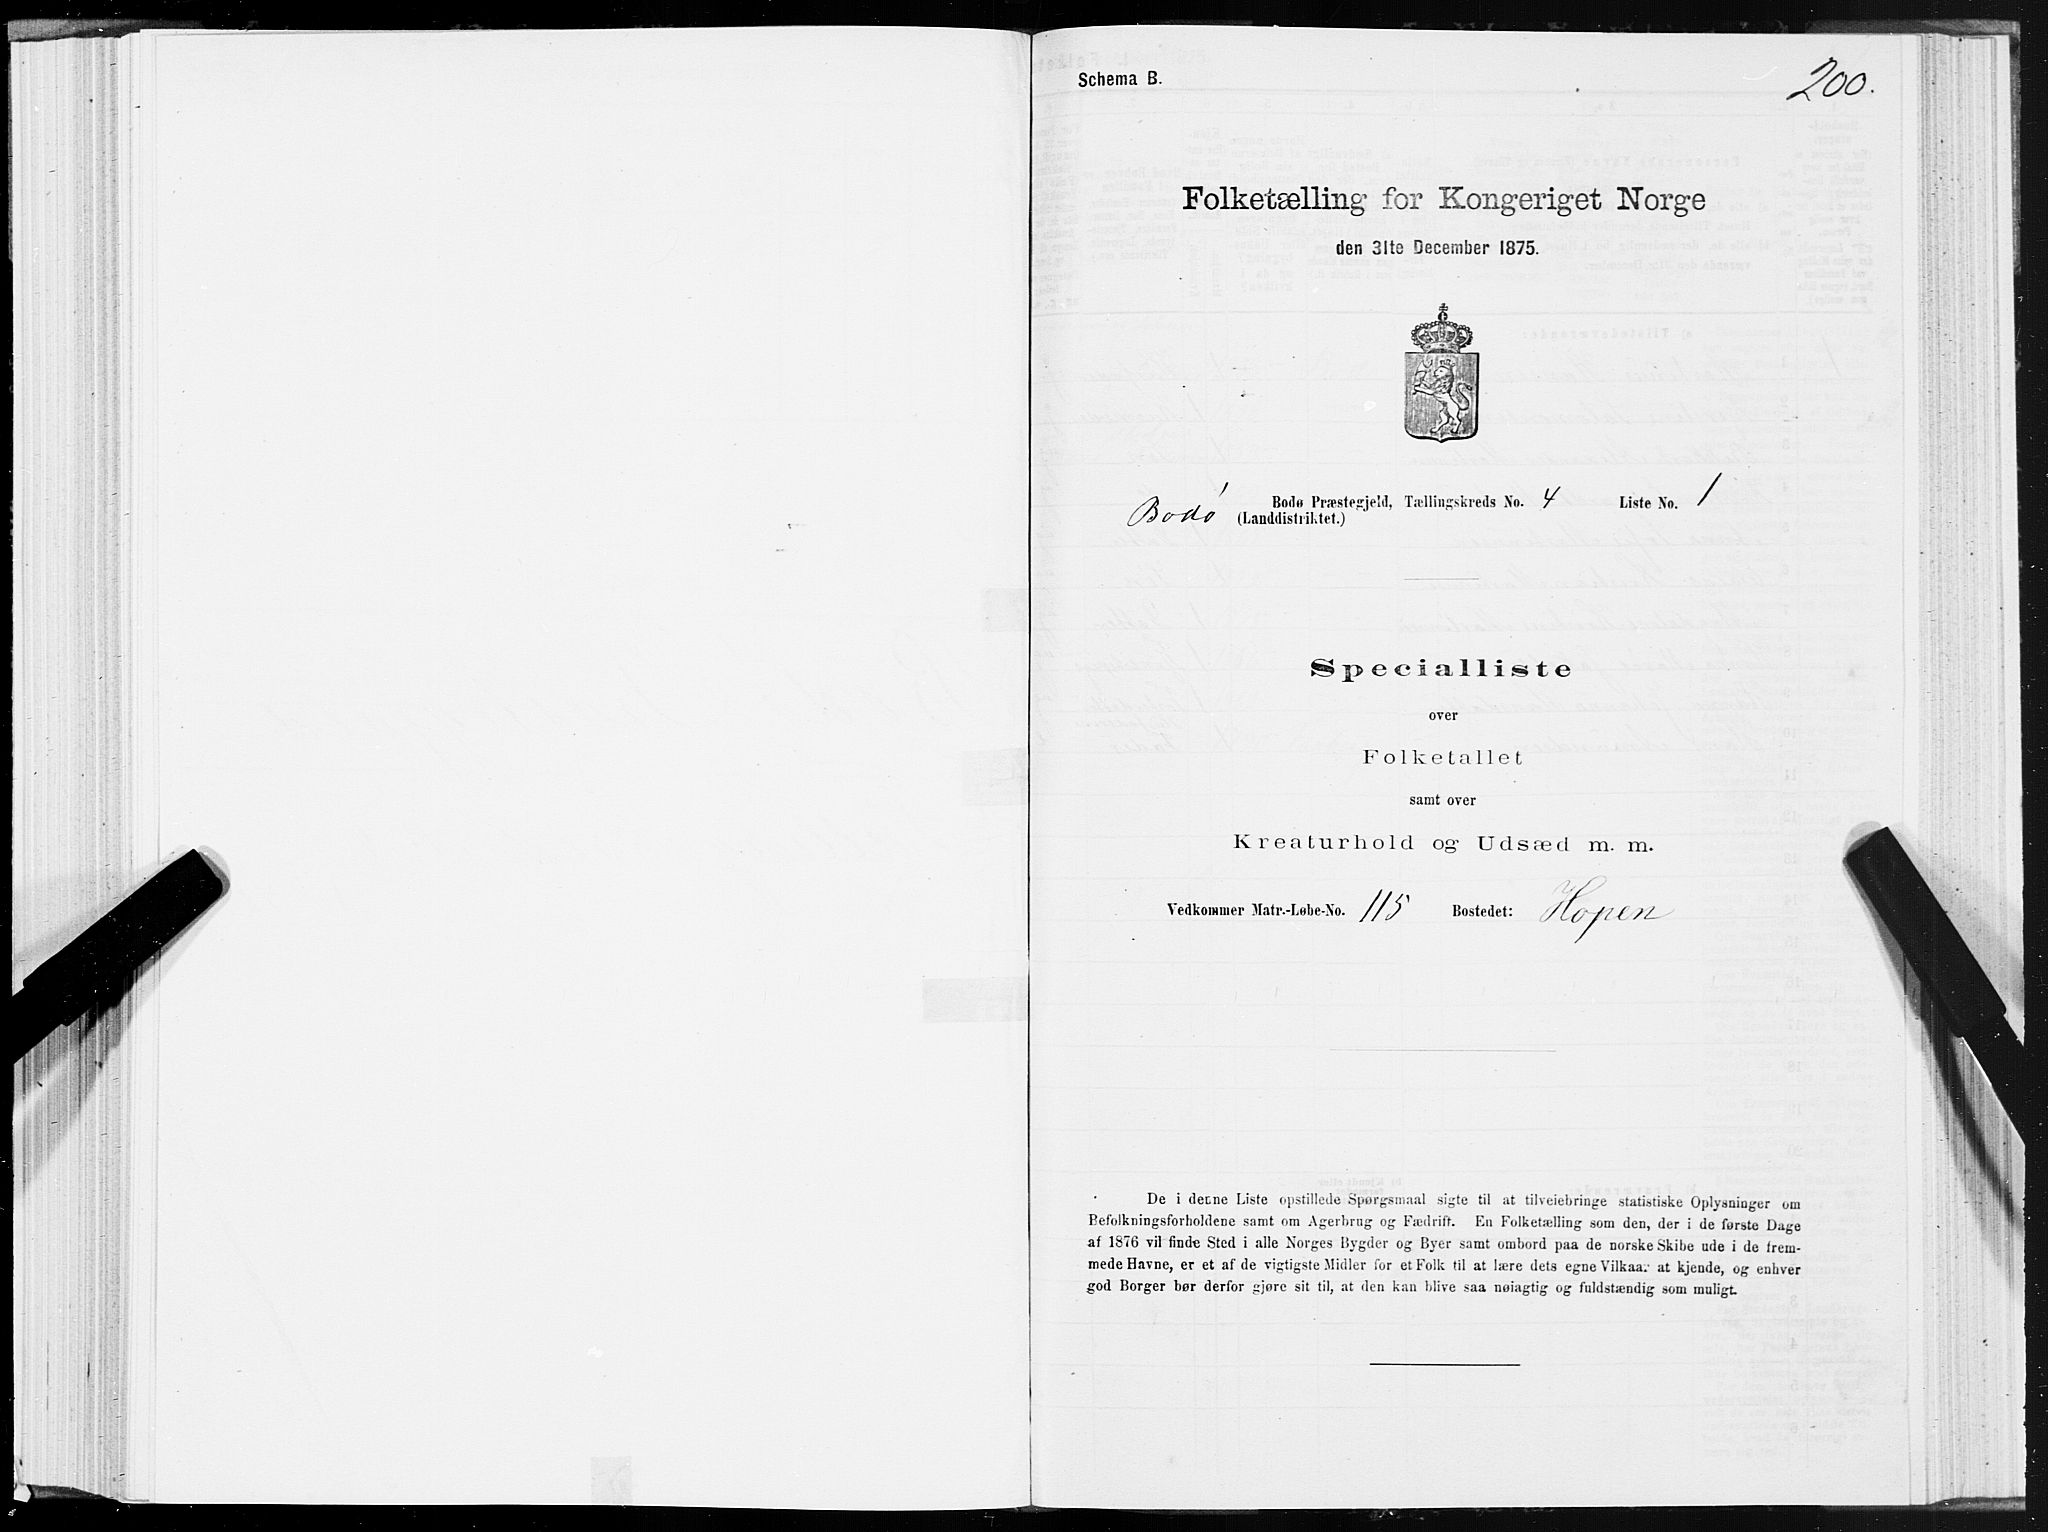 SAT, Folketelling 1875 for 1843L Bodø prestegjeld, Bodø landsokn, 1875, s. 2200